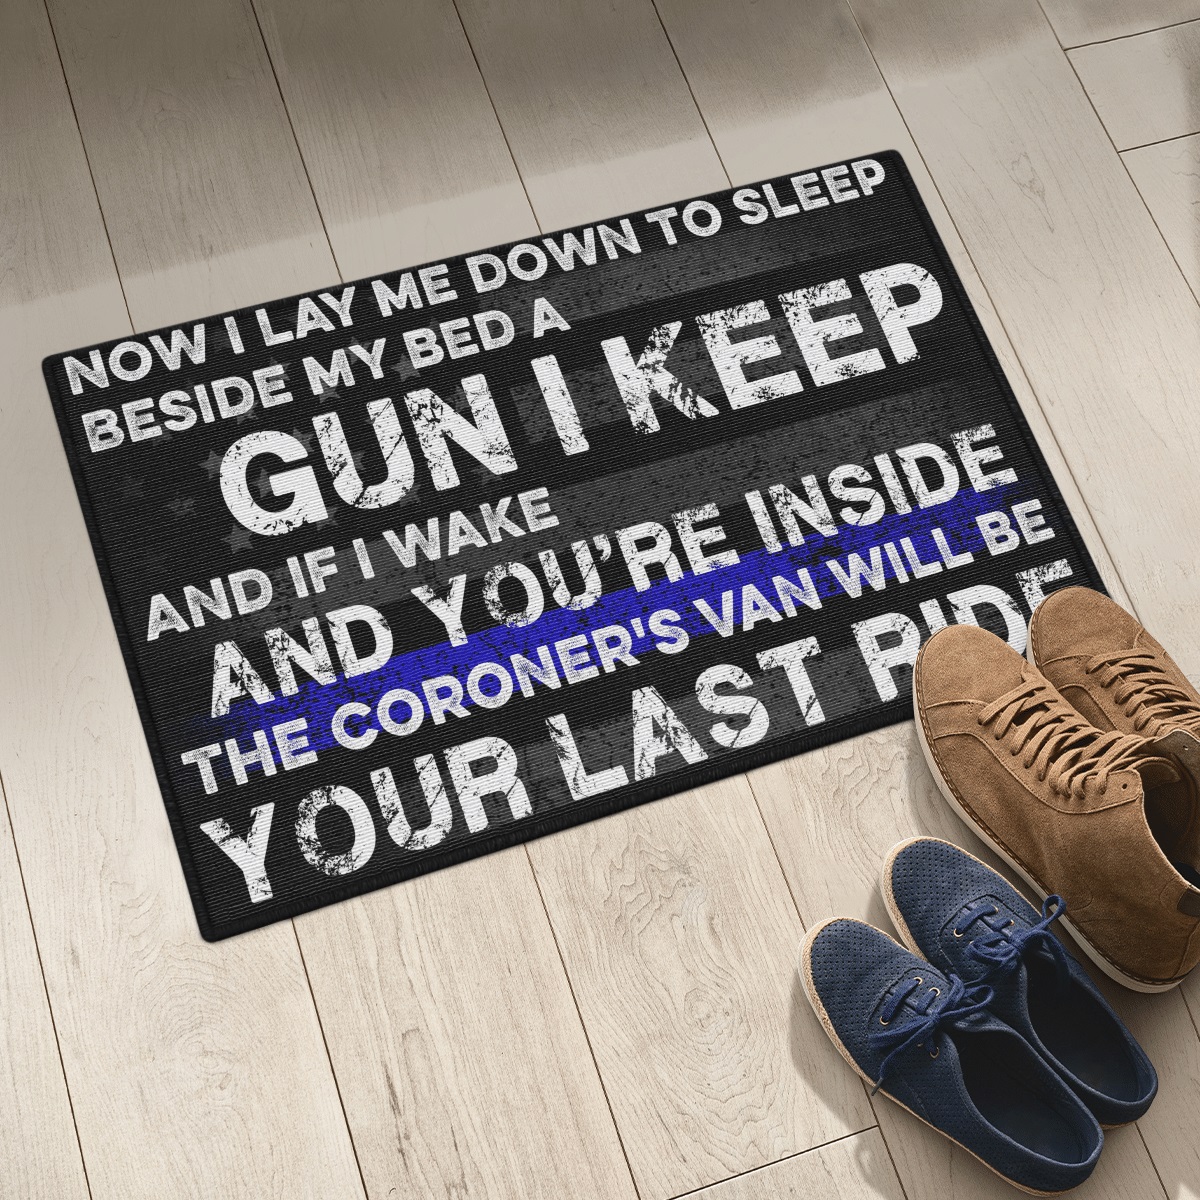 Now I lay me down to sleep beside my bed a gun I keep doormat